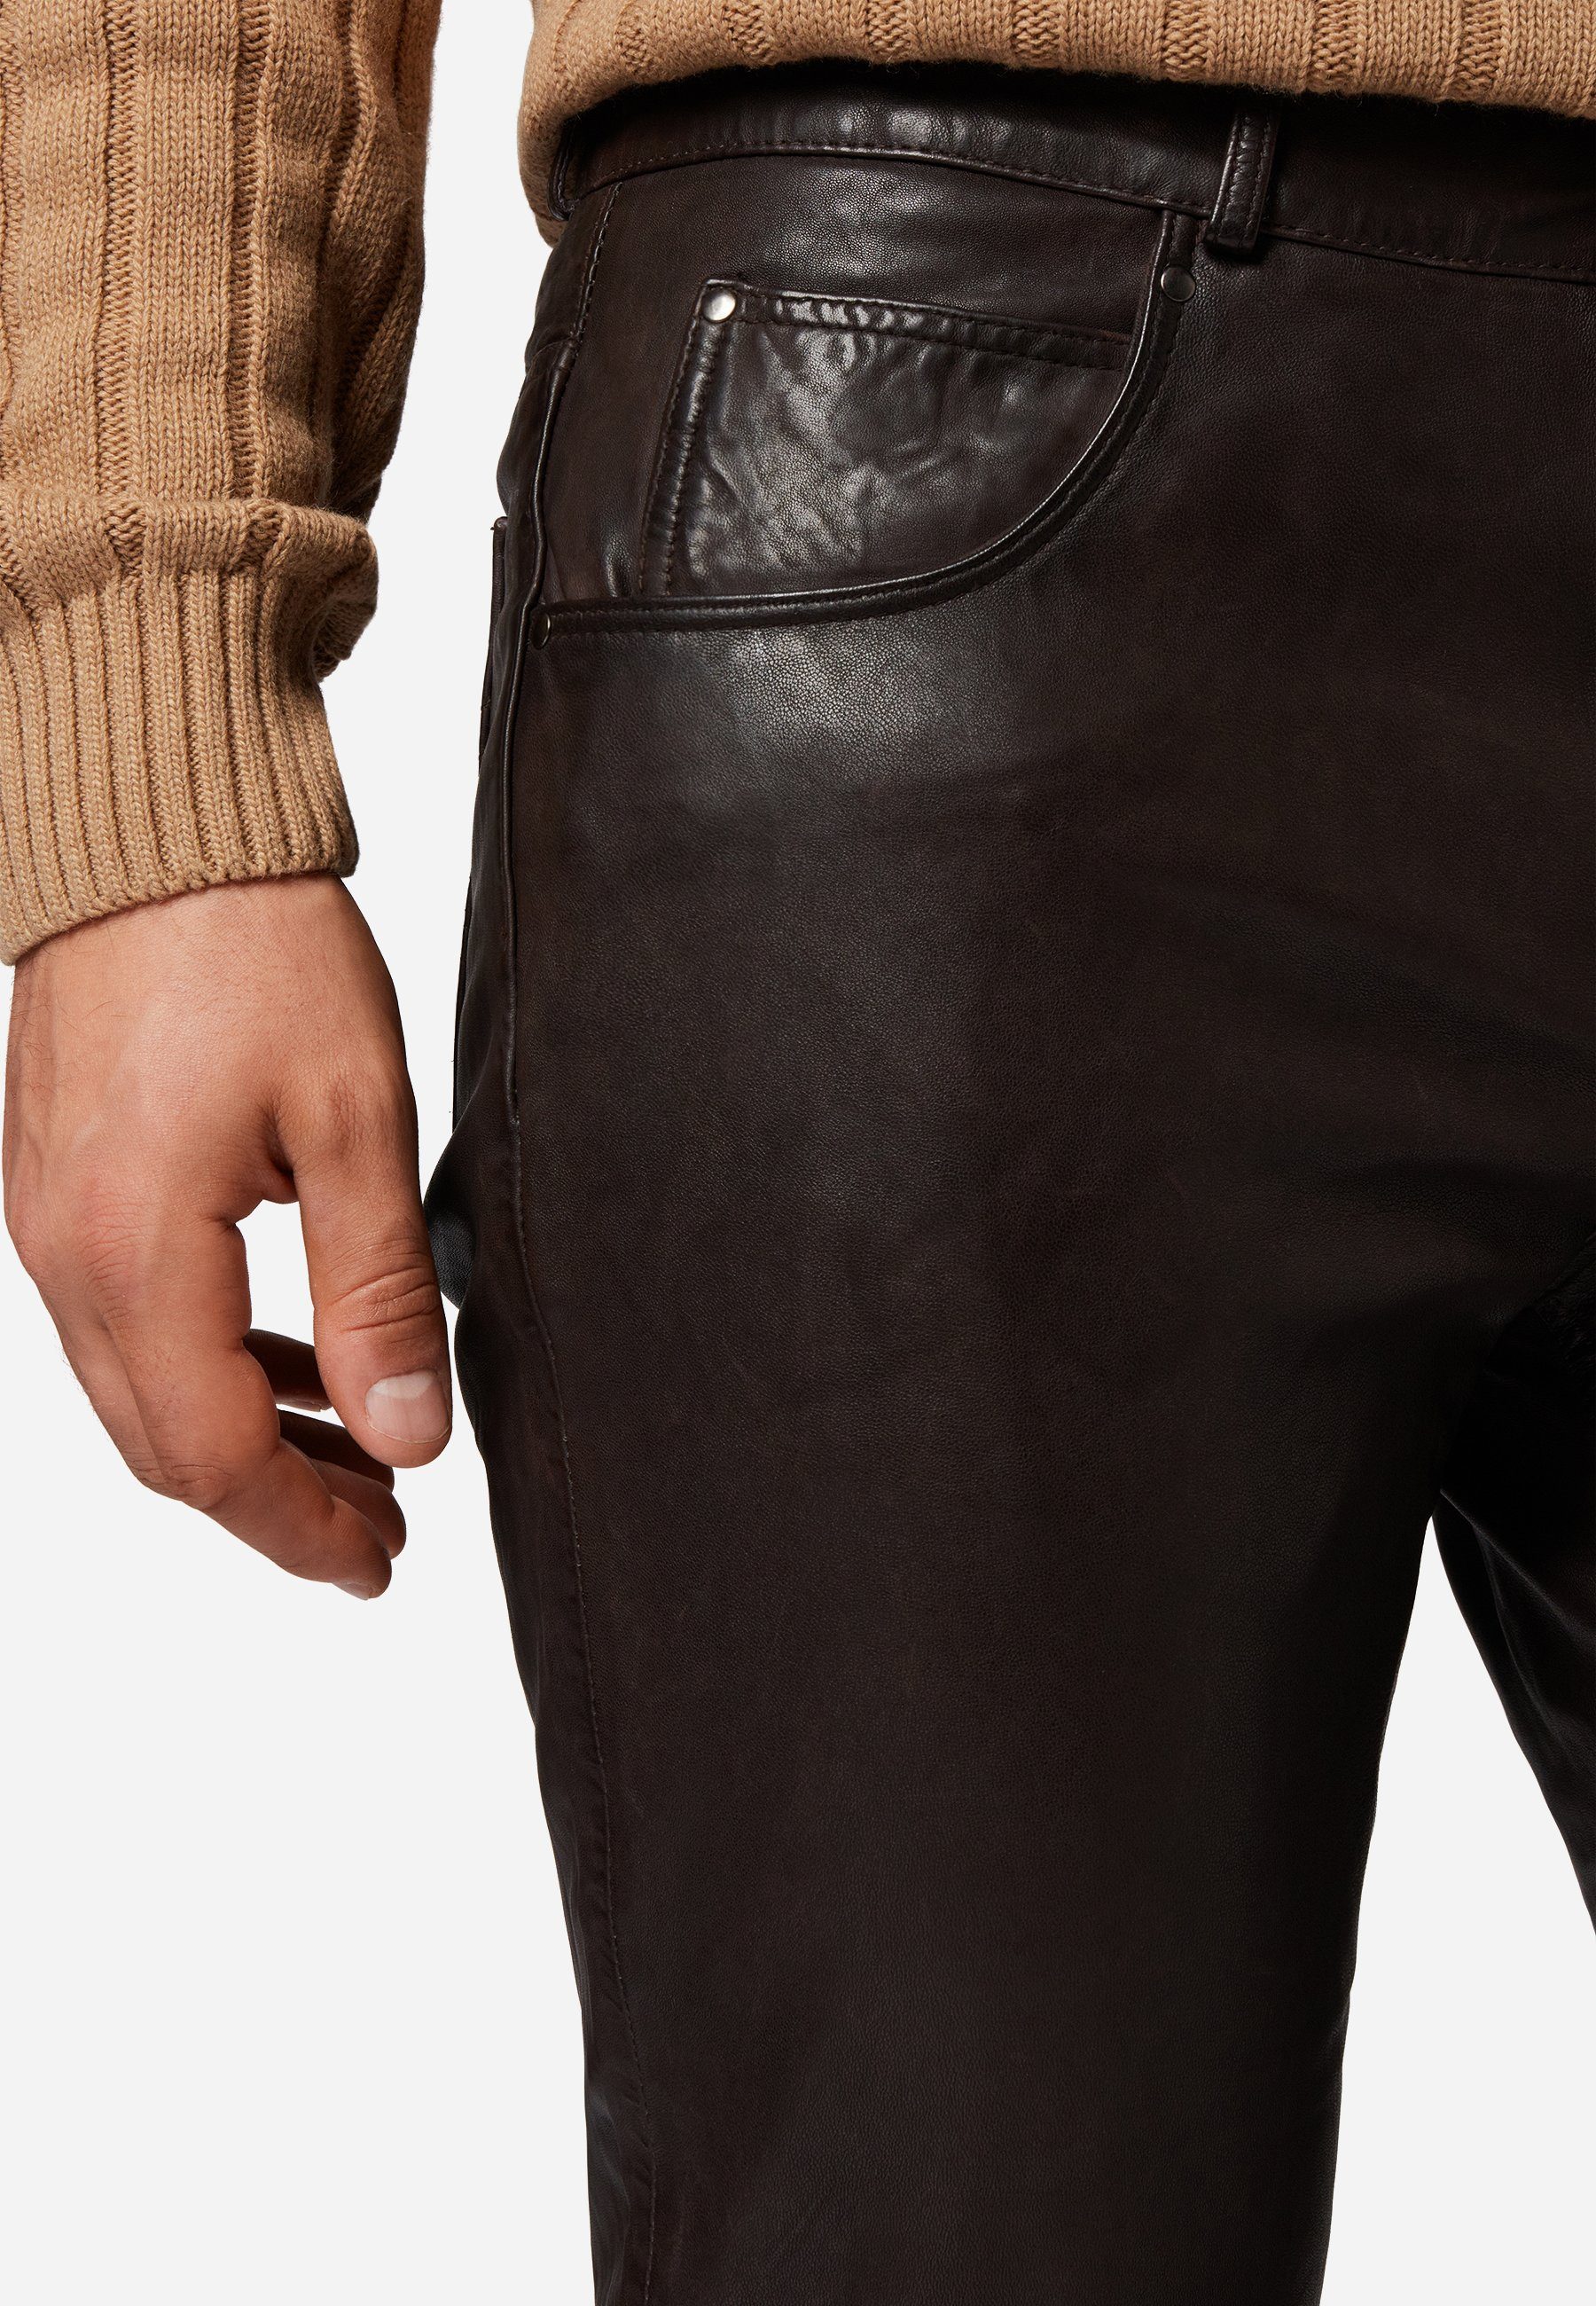 Lamm-Nappa Hochwertiges 5-Pocket Leder; Trant Pant Jeans-Optik Lederhose Braun RICANO